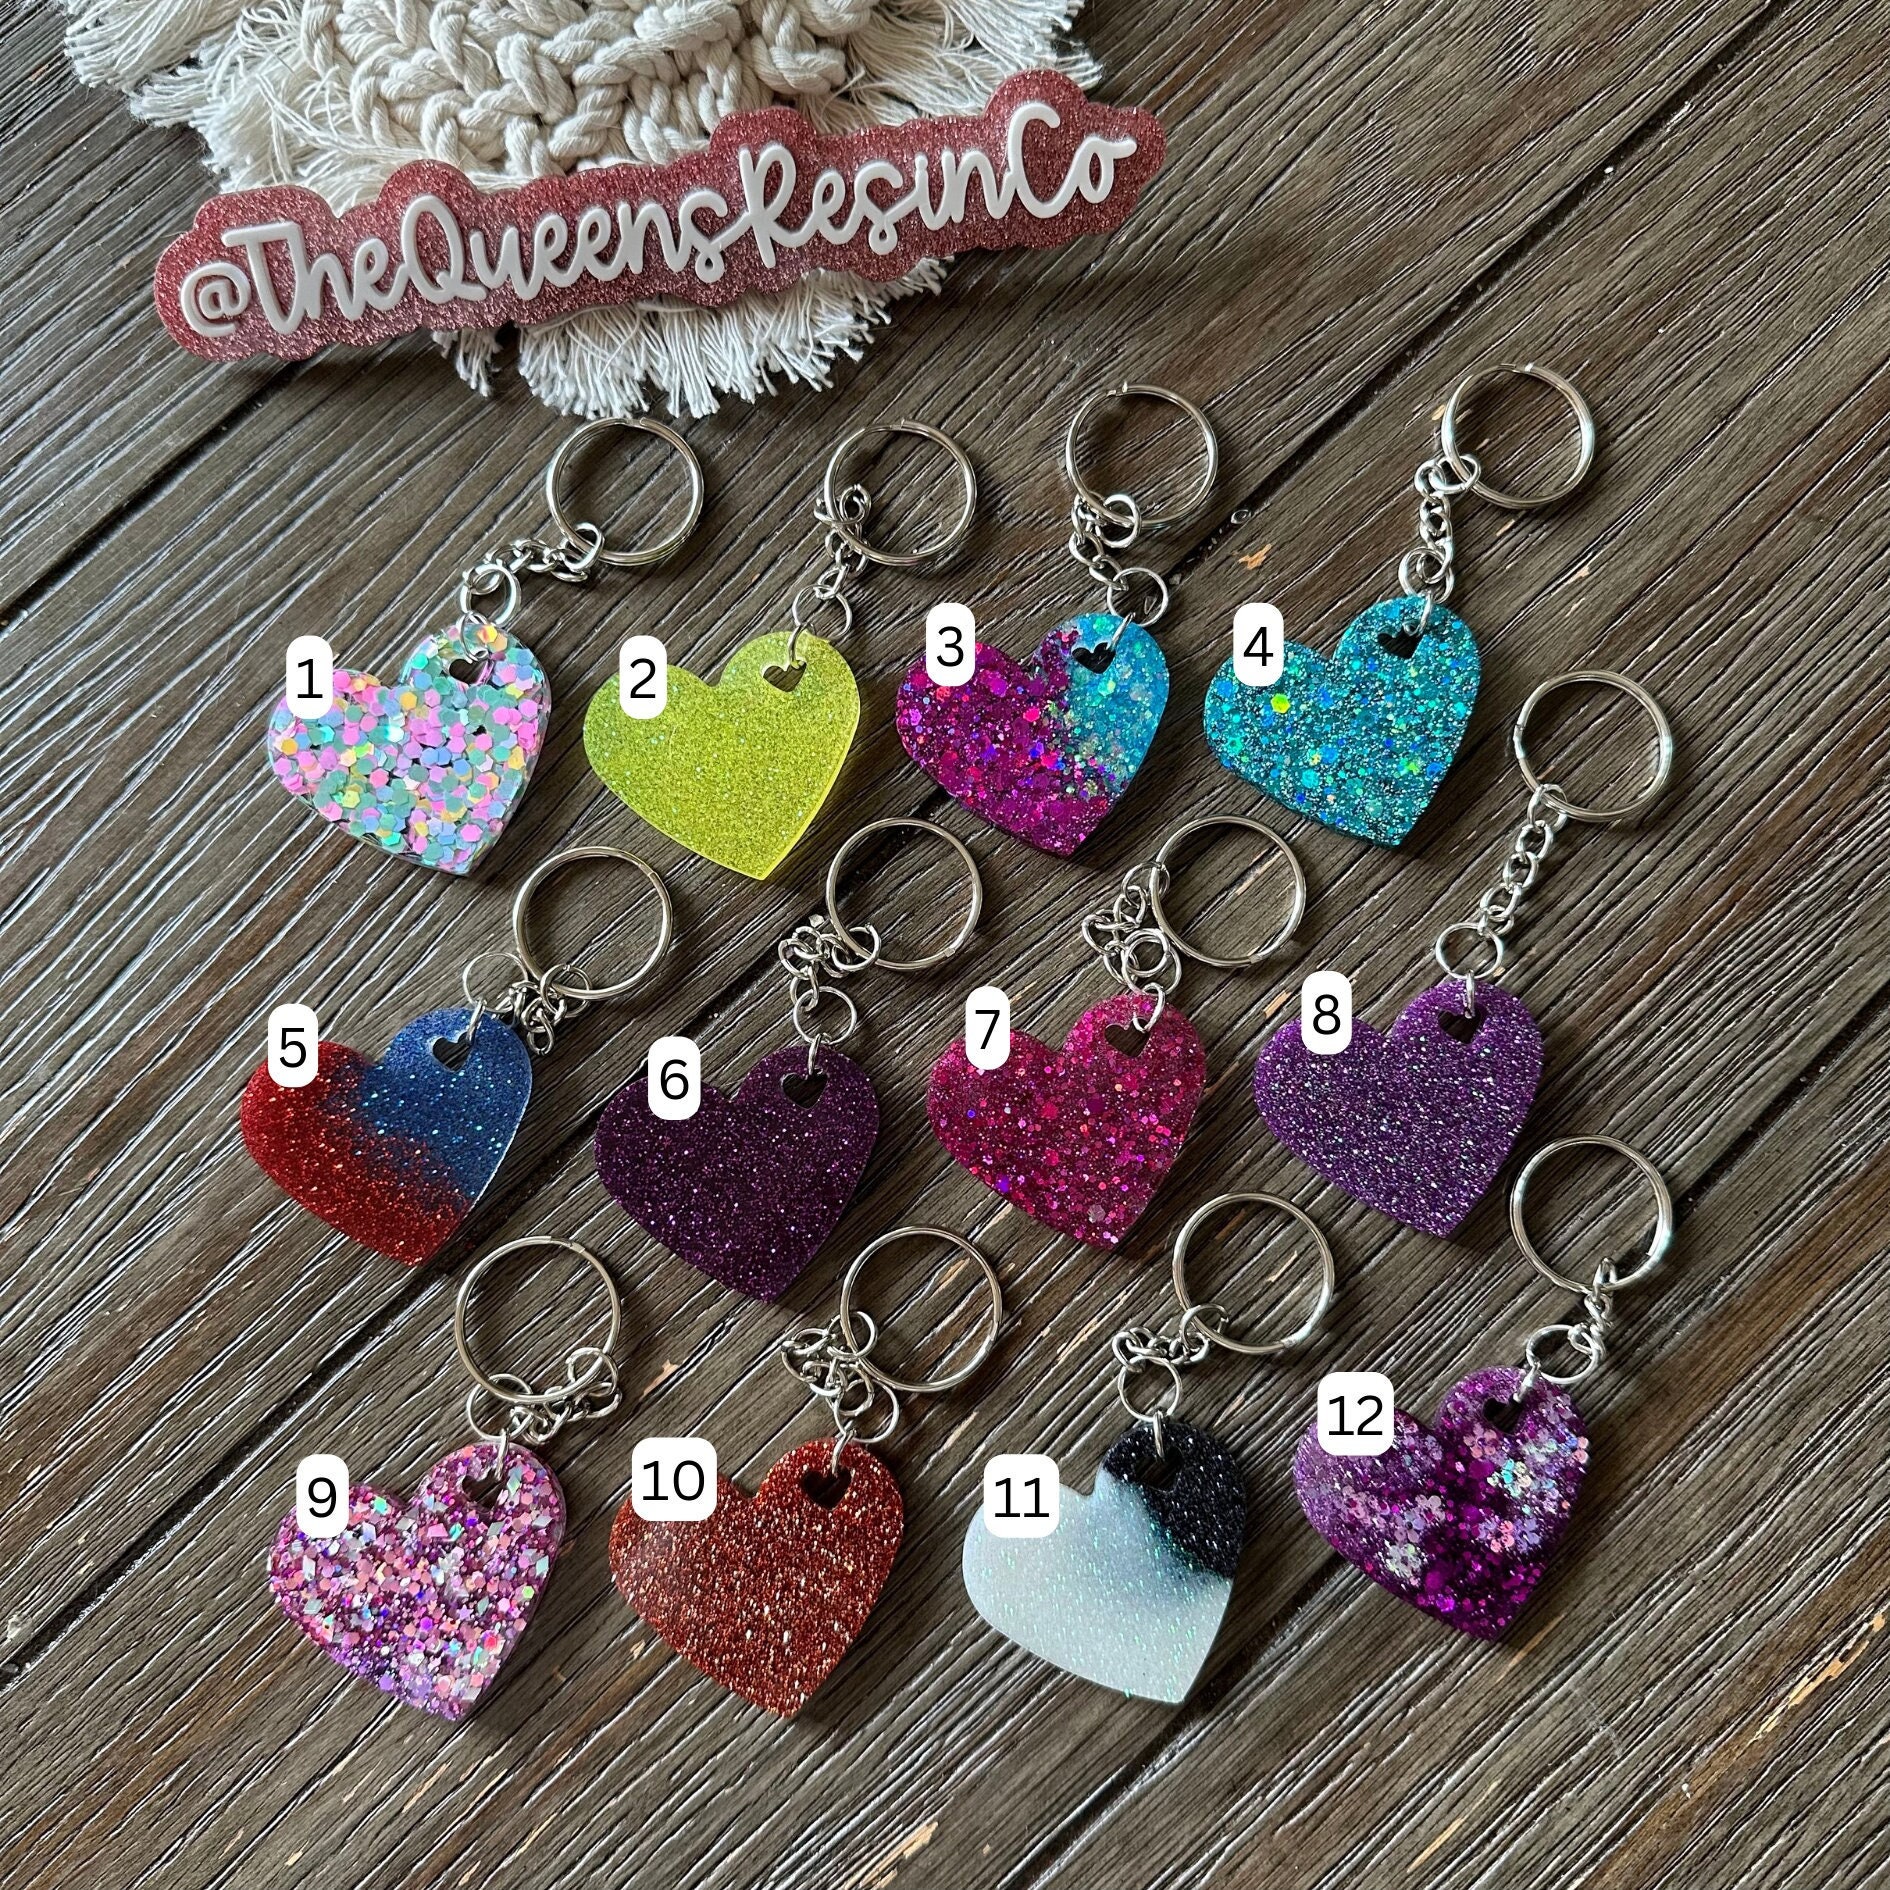 Heart Shaped Pendant Mold-heart Puzzle Resin Mold-couple Heart Keychain Mold-jewelry  Making Mold-uv Resin Mold-epoxy Art Mold 